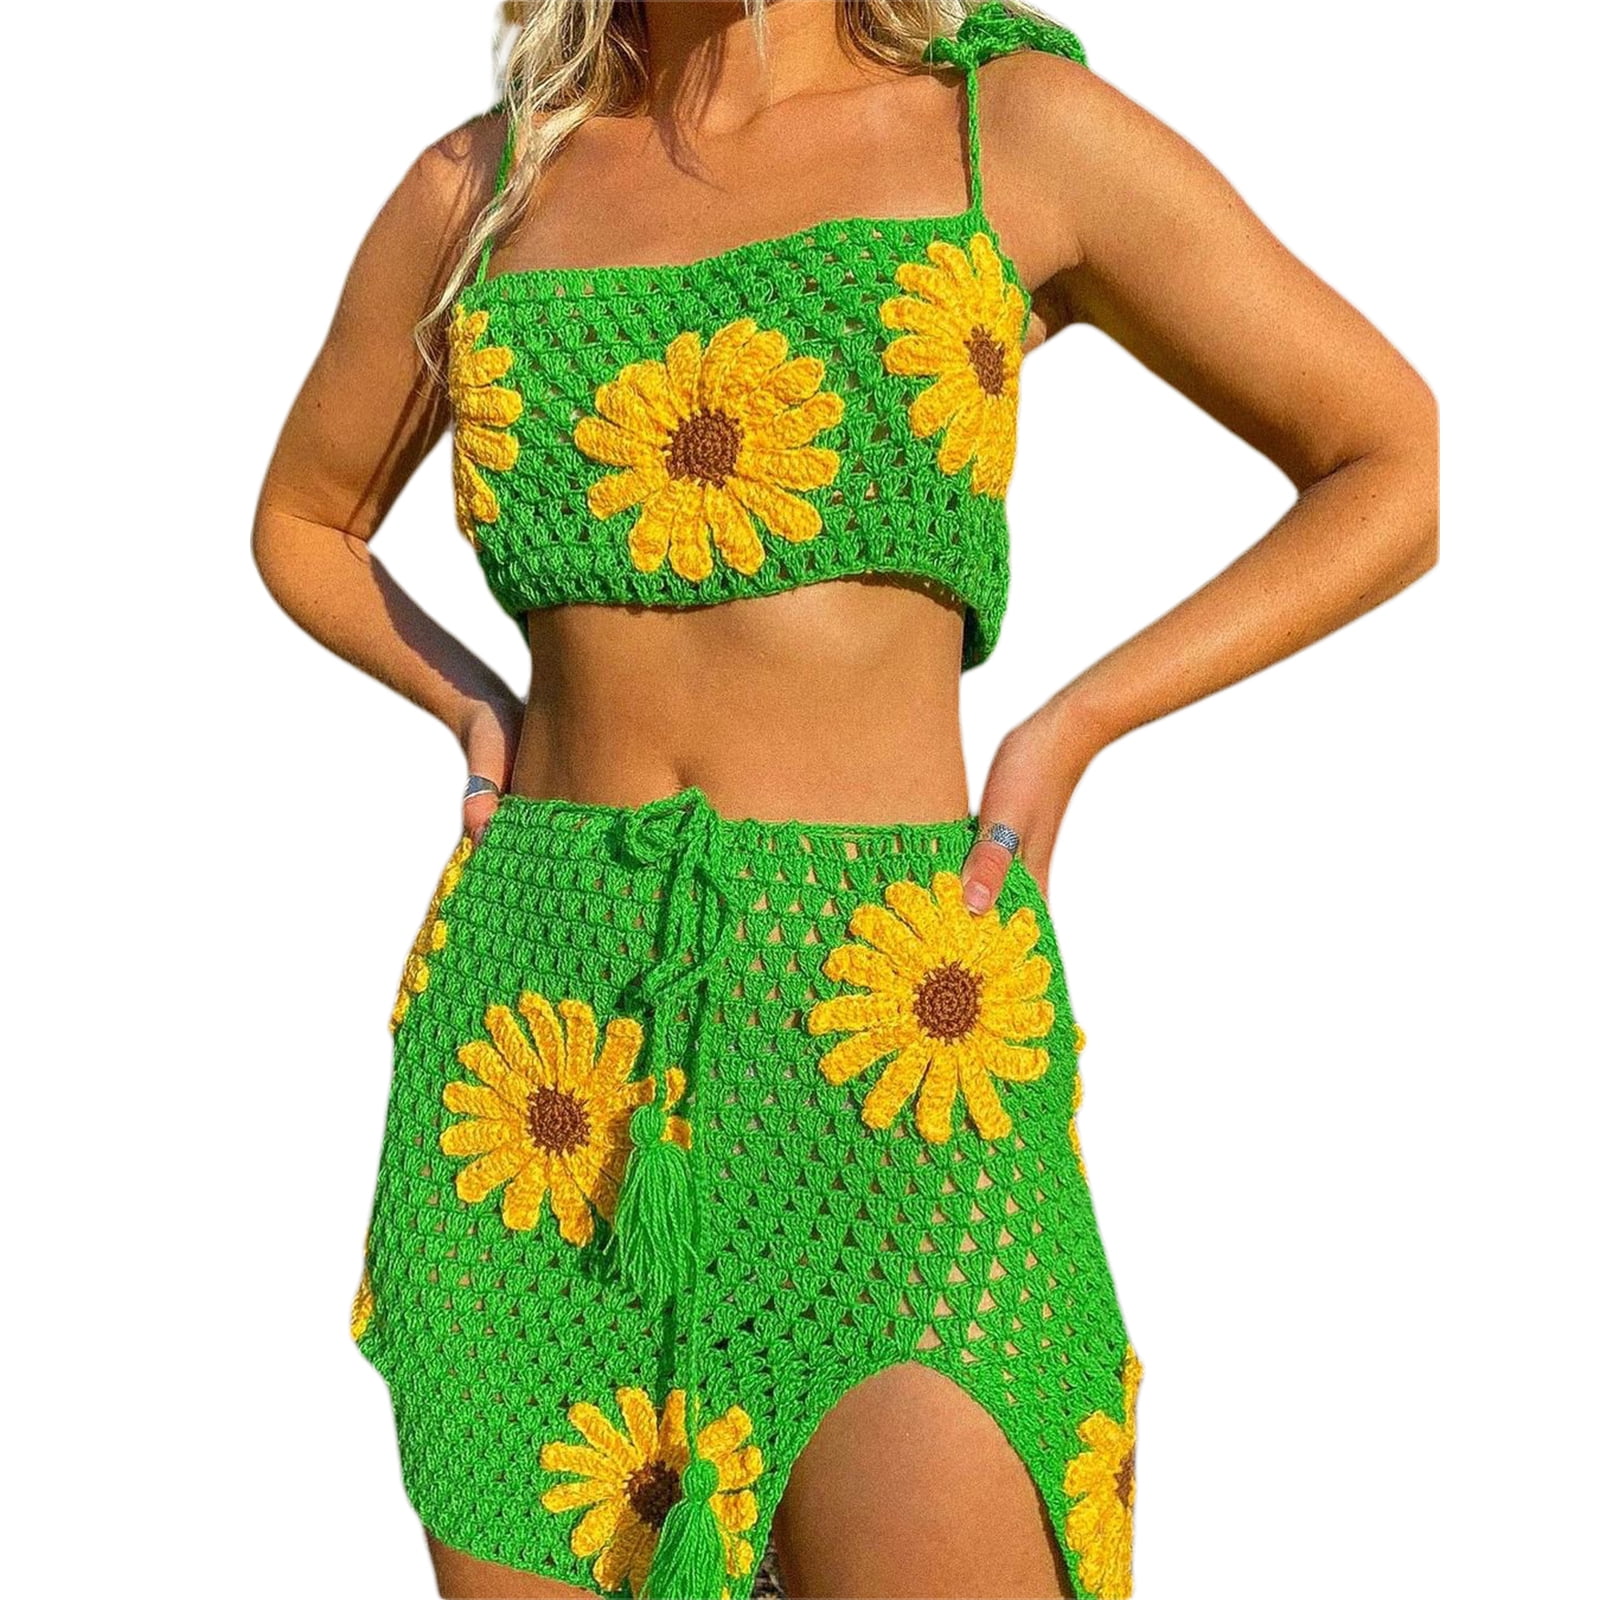 Chic Crochet Two Piece Set For Women Irregular Crochet Tank And Belt Skirt,  Trendy Streetwear Outfit From Daye03, $18.42